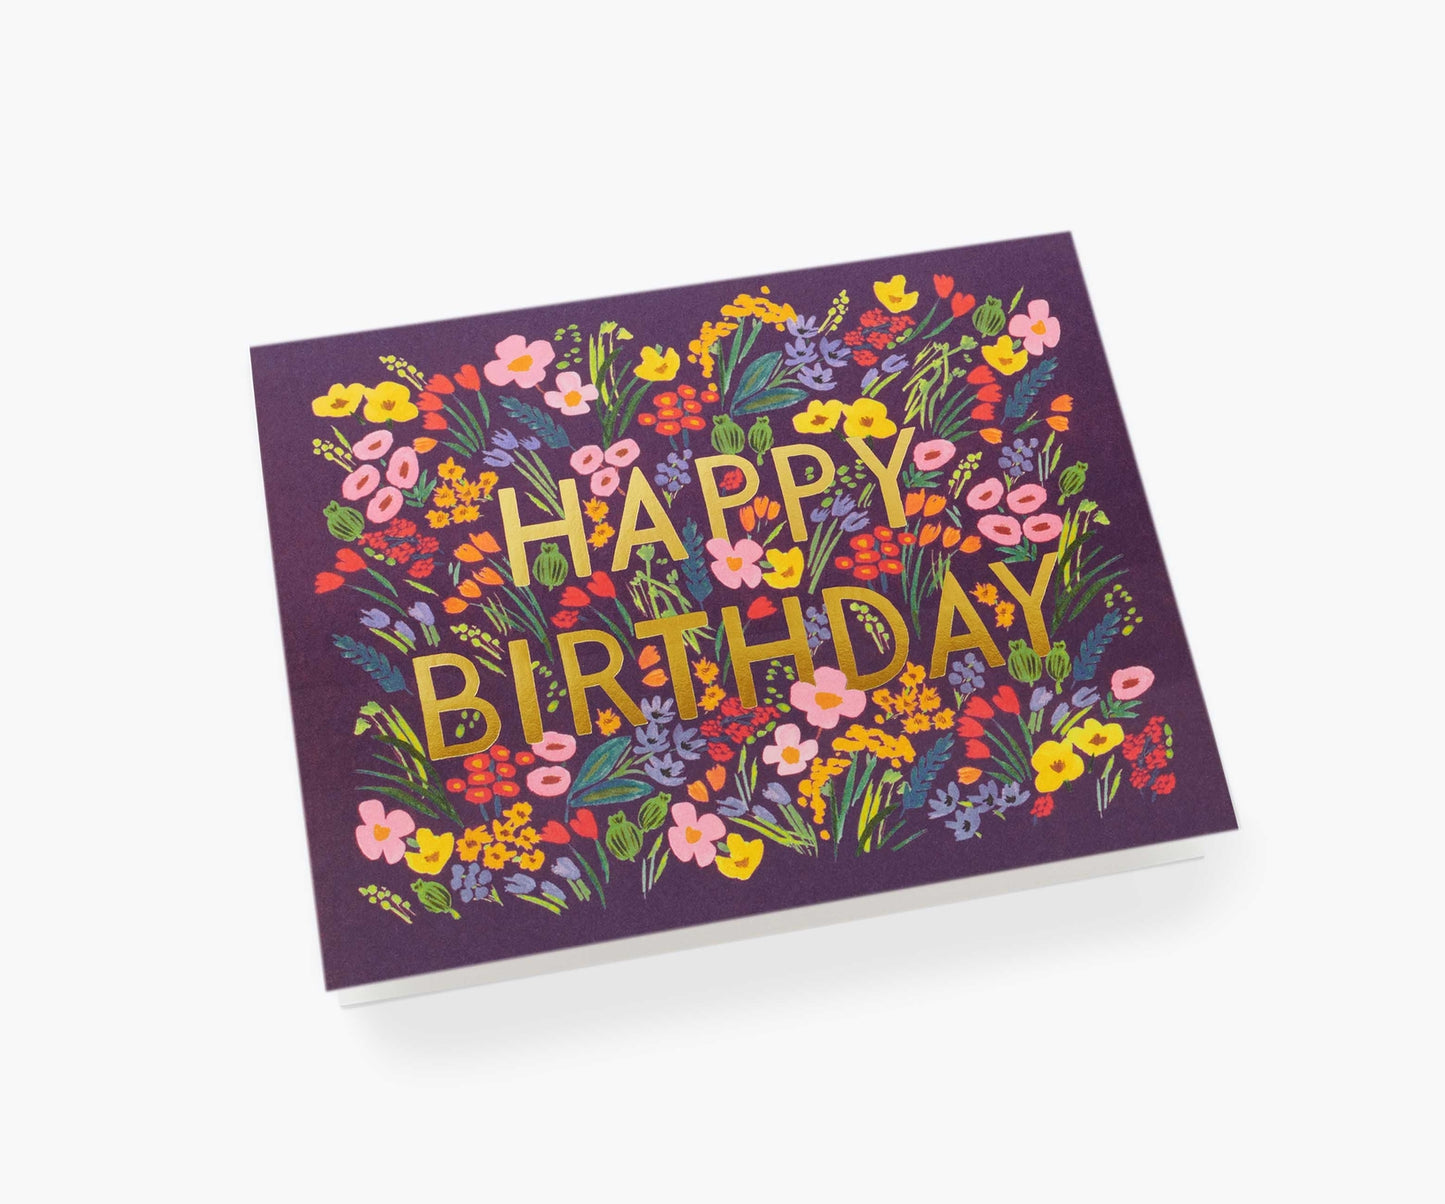 Lea Birthday Card